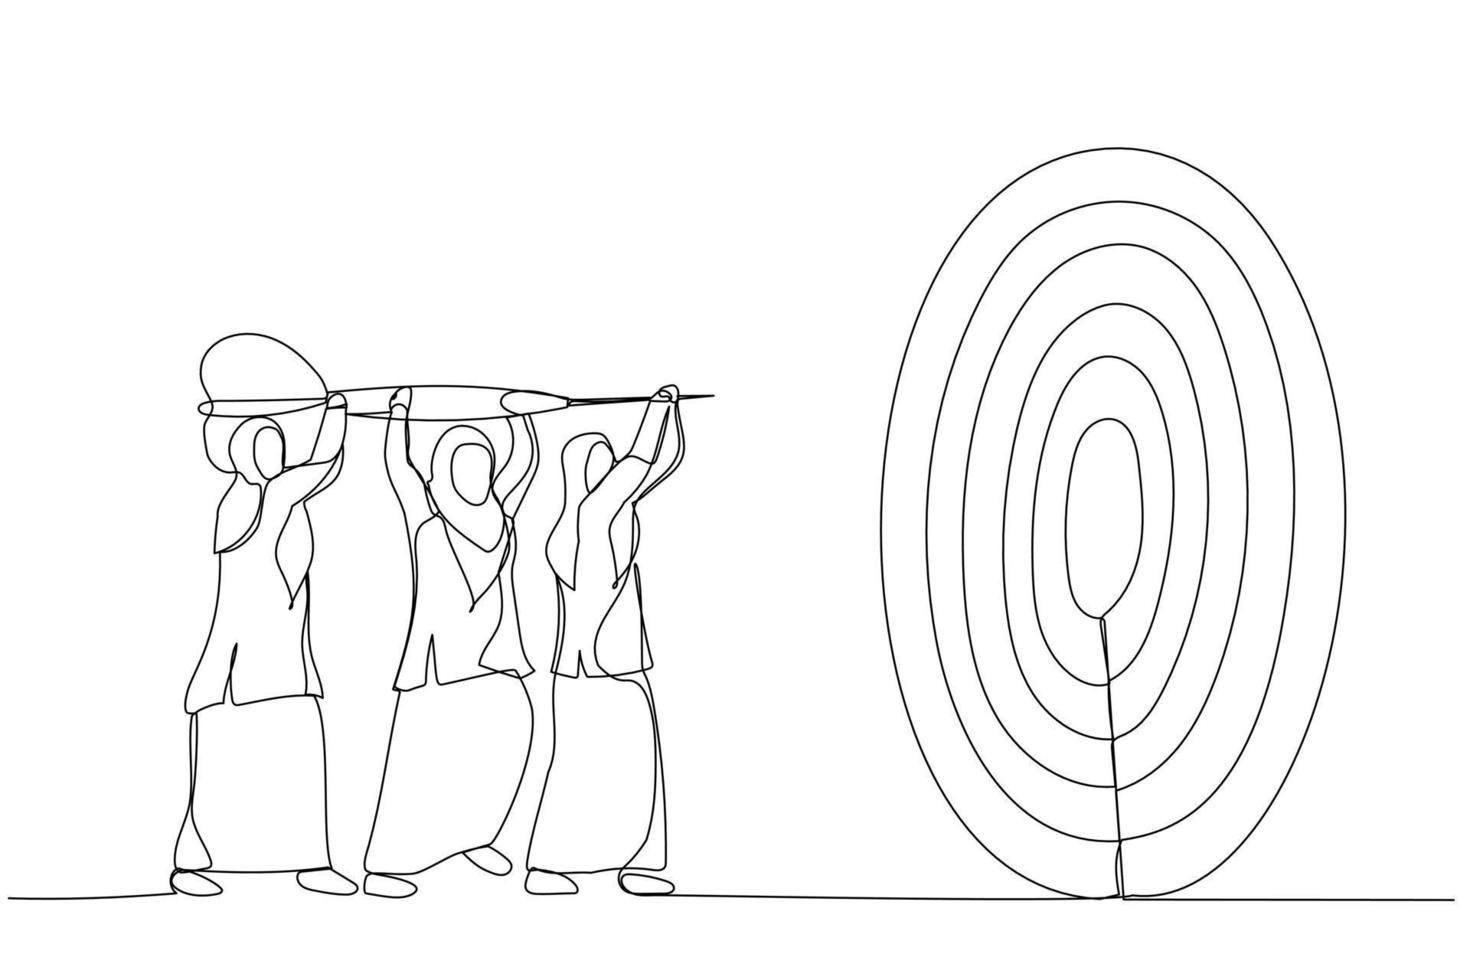 Illustration of businesswoman help holding dart aiming on bullseye target. Metaphor for team goal, teamwork collaboration. Single continuous line art style vector